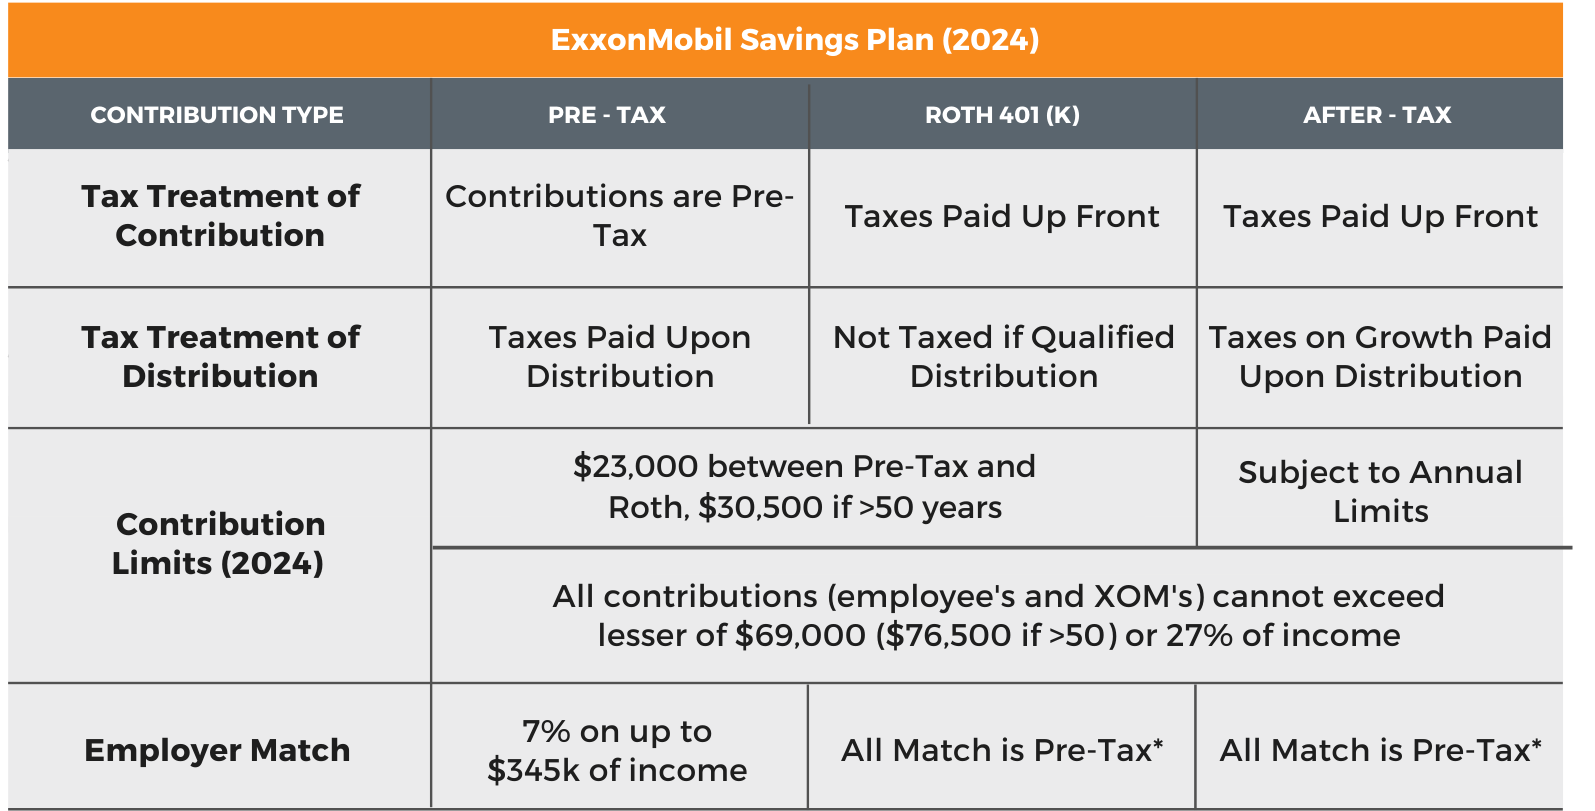 exxonmobil savings plan 401k contribution limits 2024